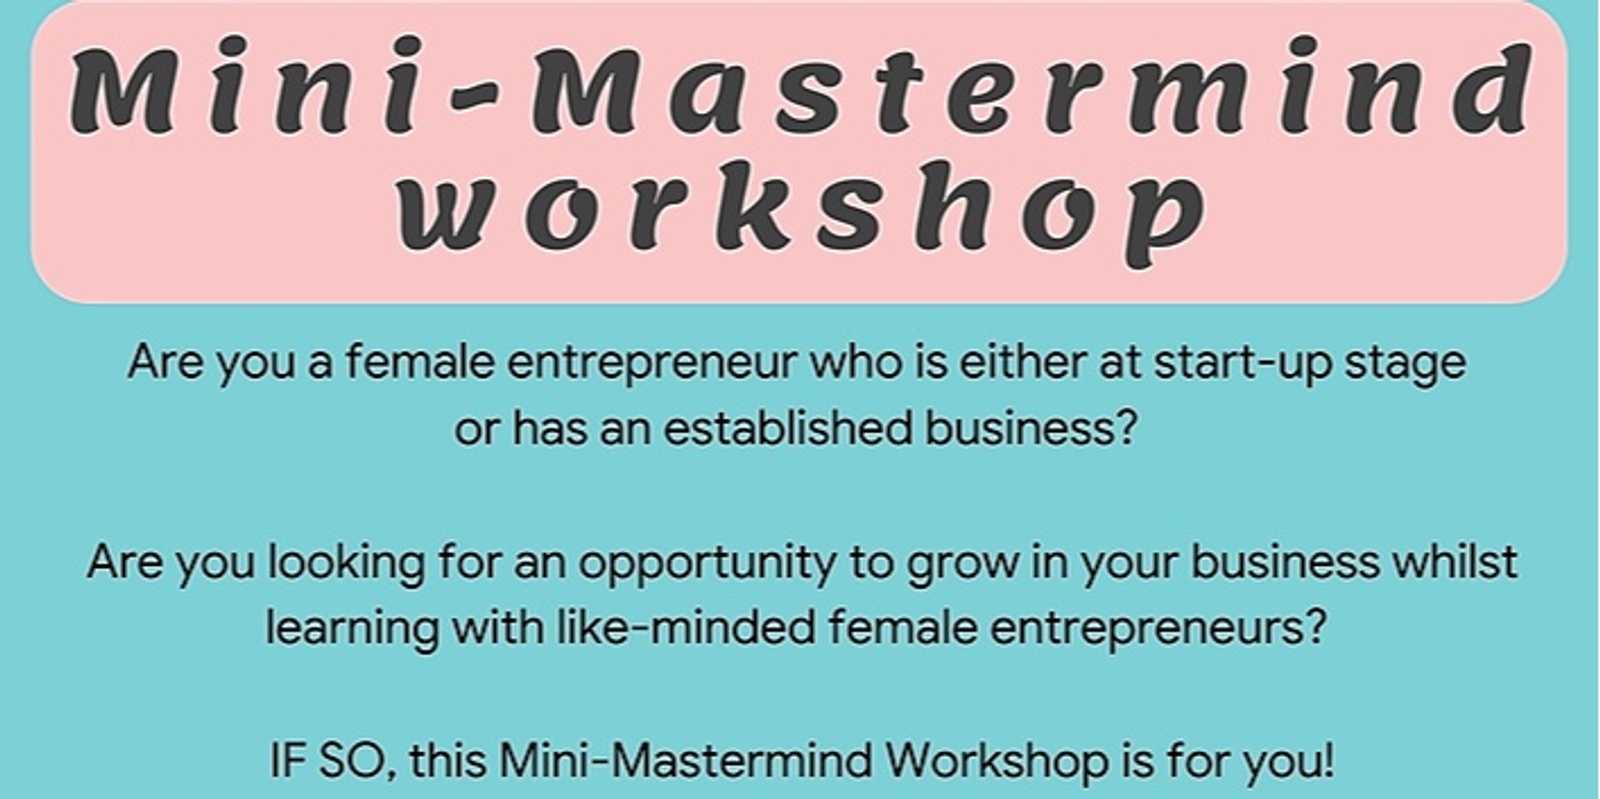 Banner image for Mini Mastermind Workshop for Female Entrepreneurs